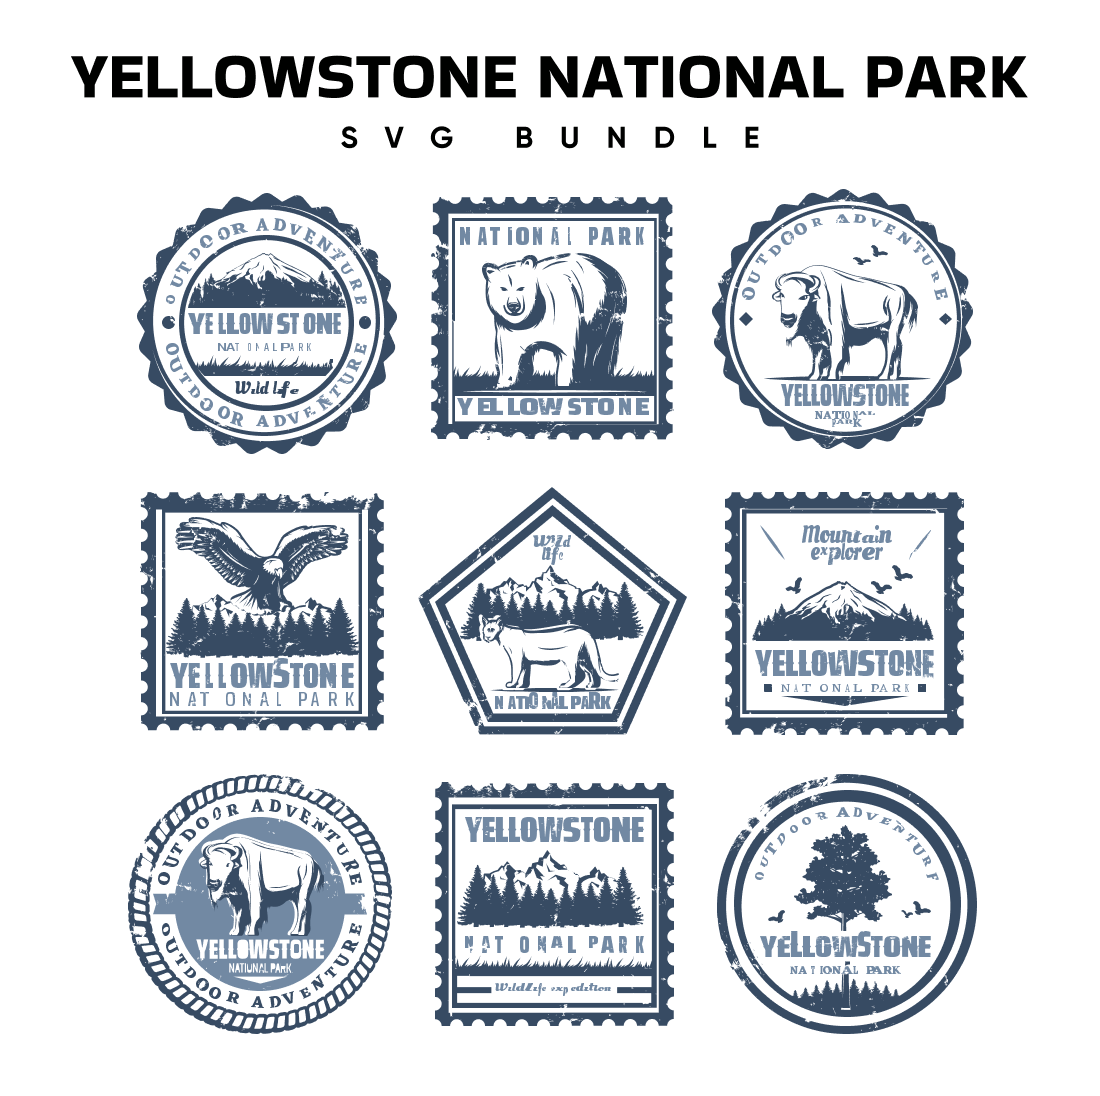 Yellowstone National Park SVG.